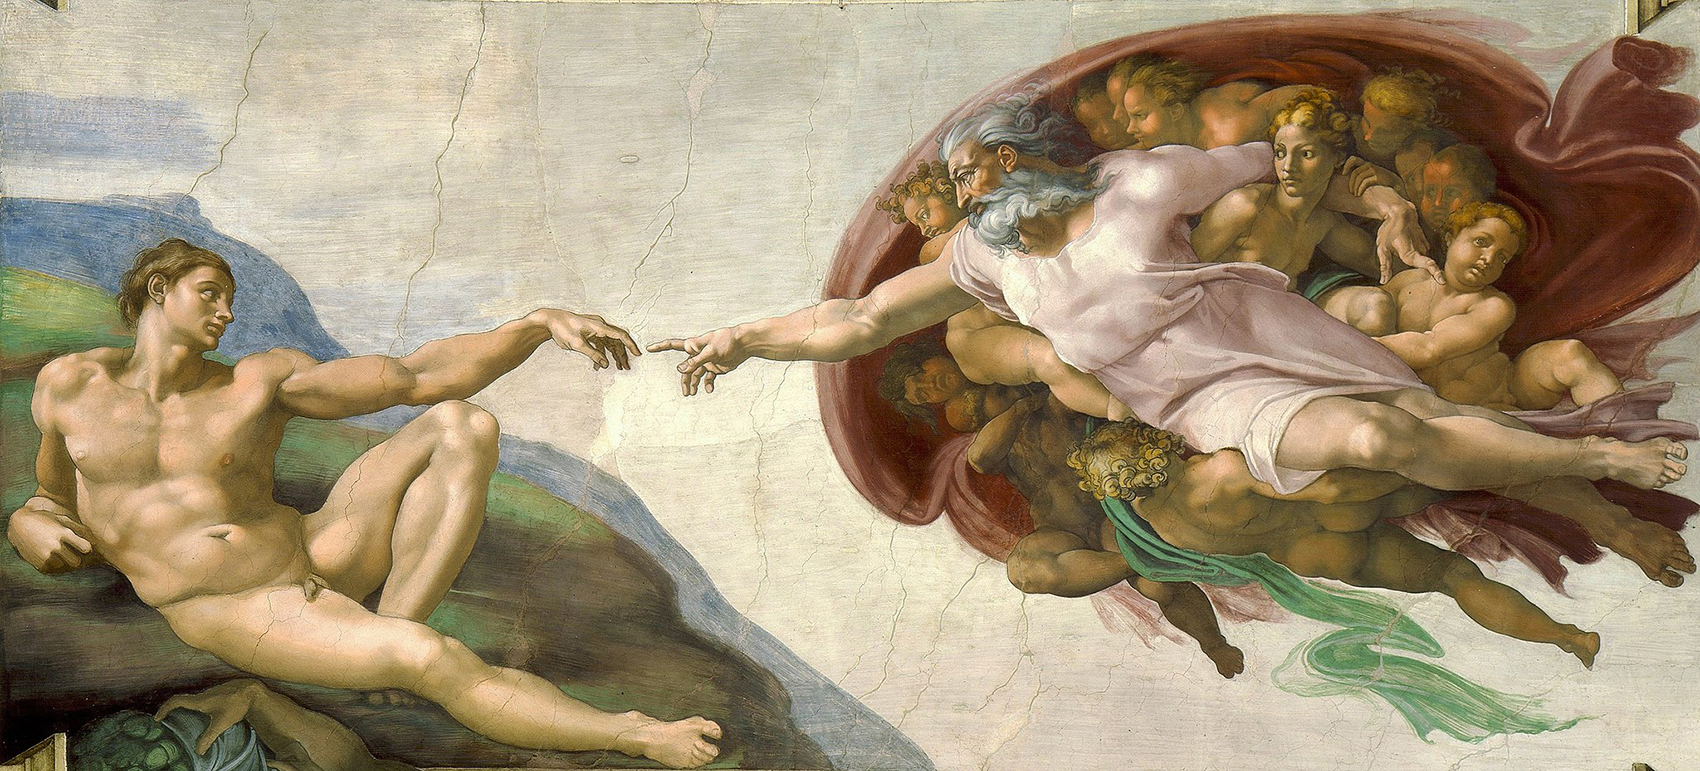 Michelangelo - public domain via Wikimedia Commons